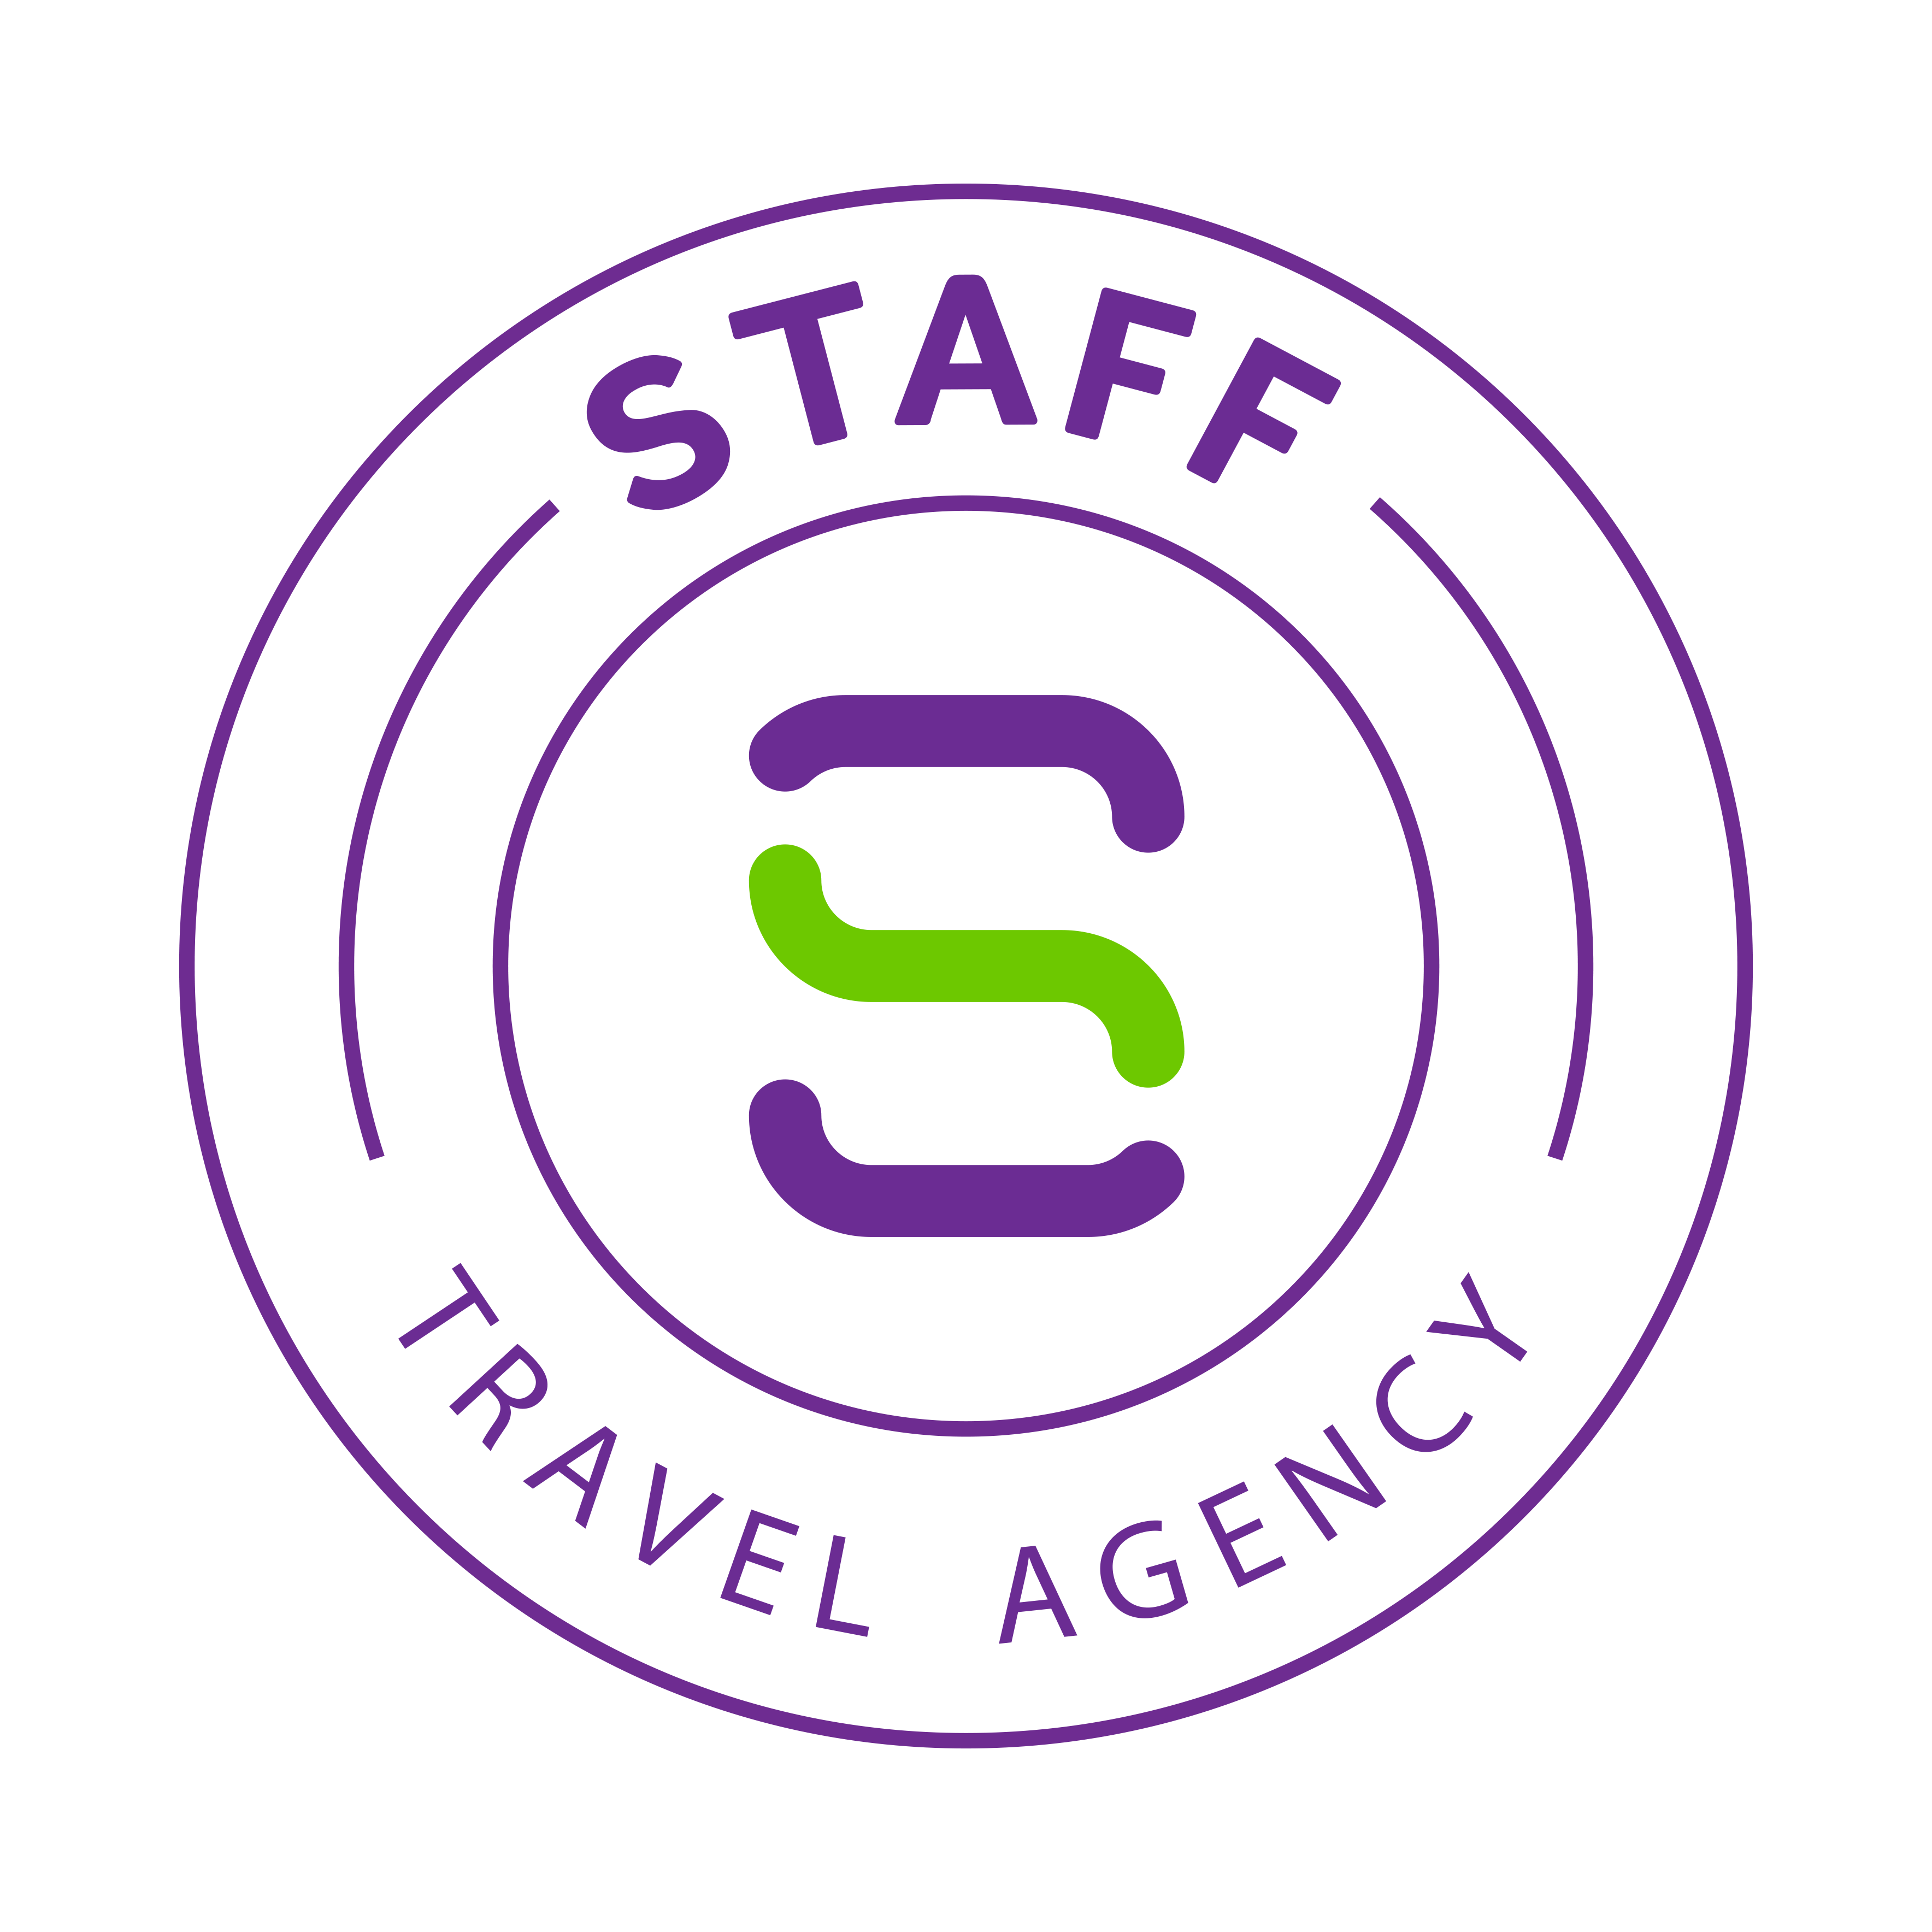 Staff Travel